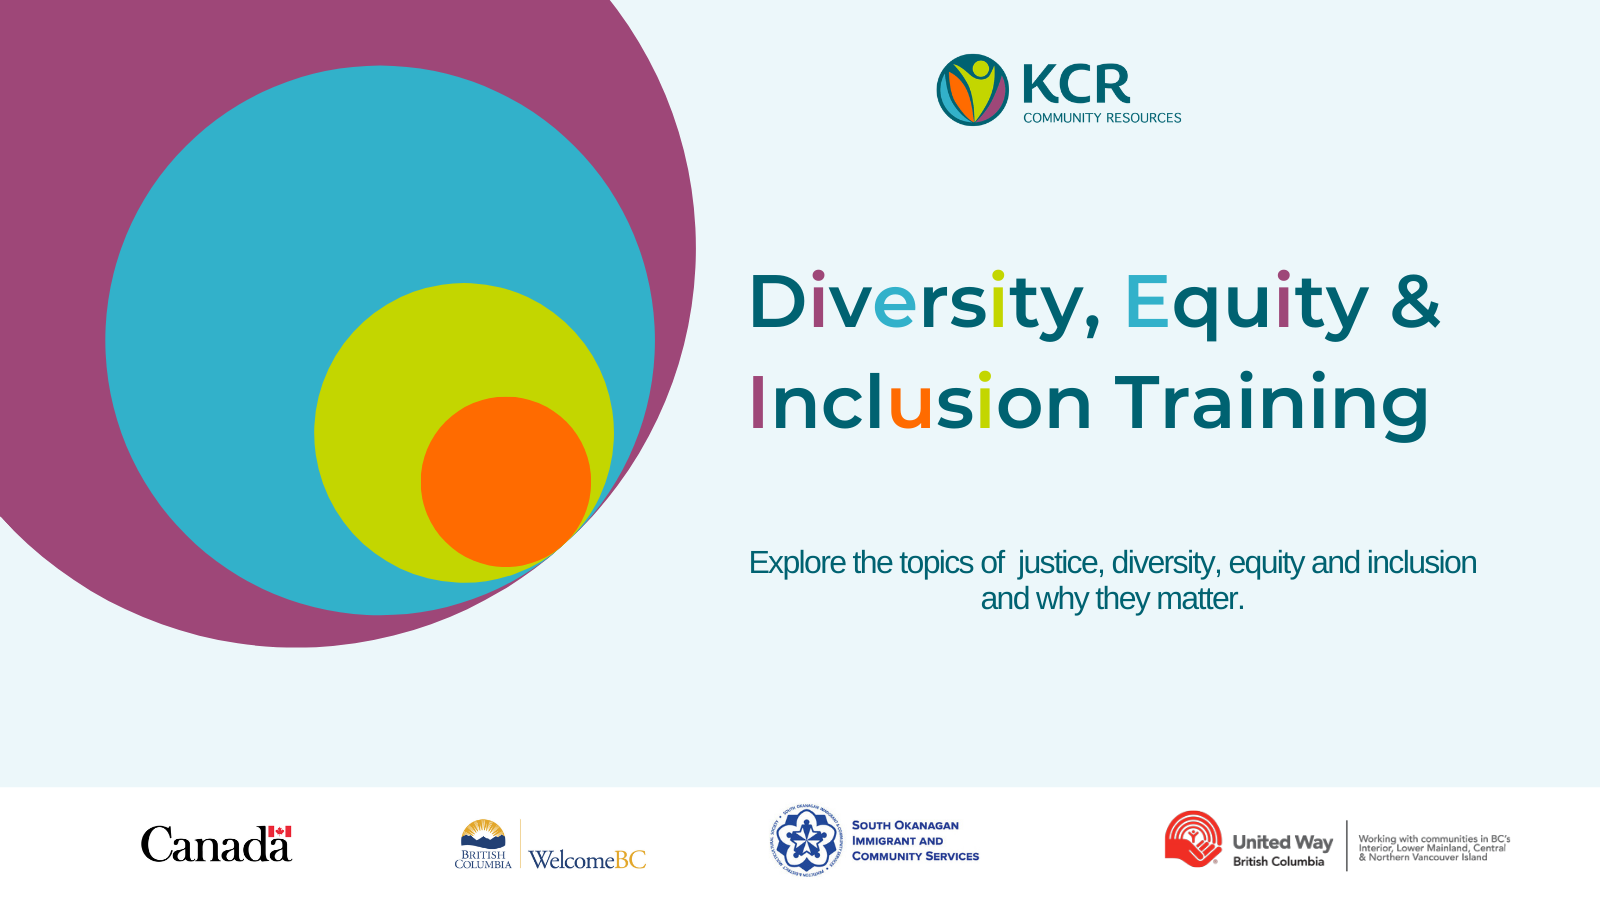 KCR Community Resources - Diversity, Equity & Inclusion Workshop